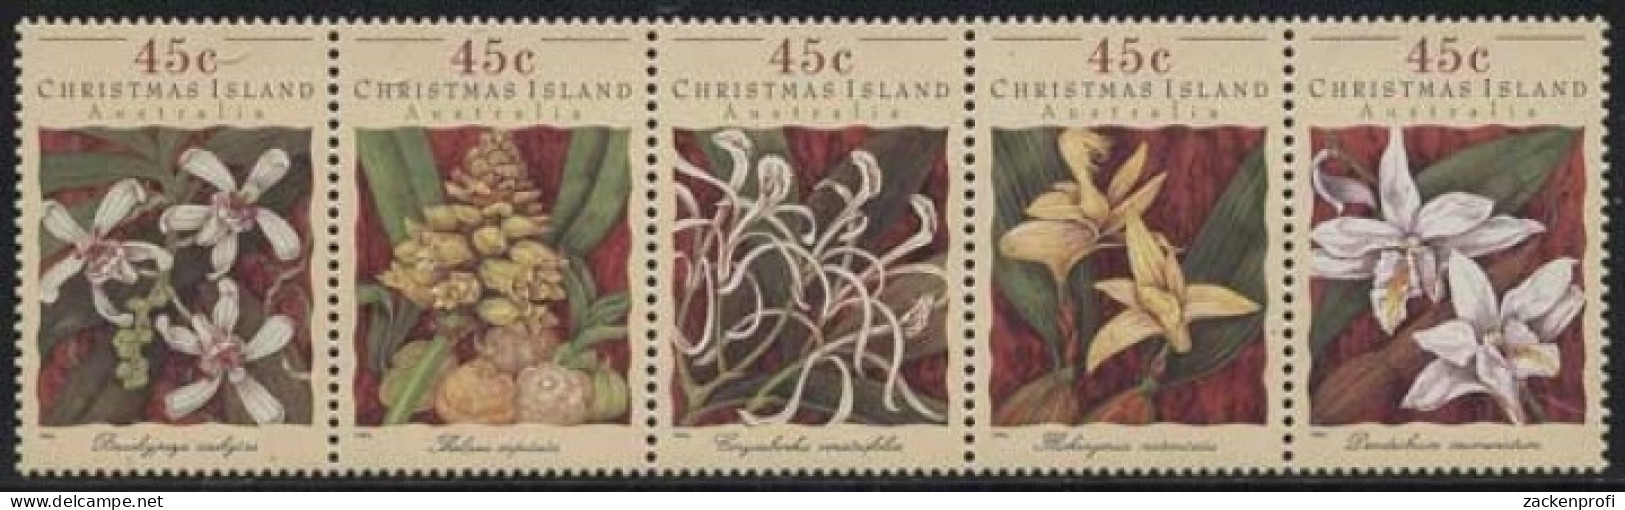 Weihnachts-Insel 1994 Orchideen 397/01 ZD Postfrisch (C25491) - Christmas Island